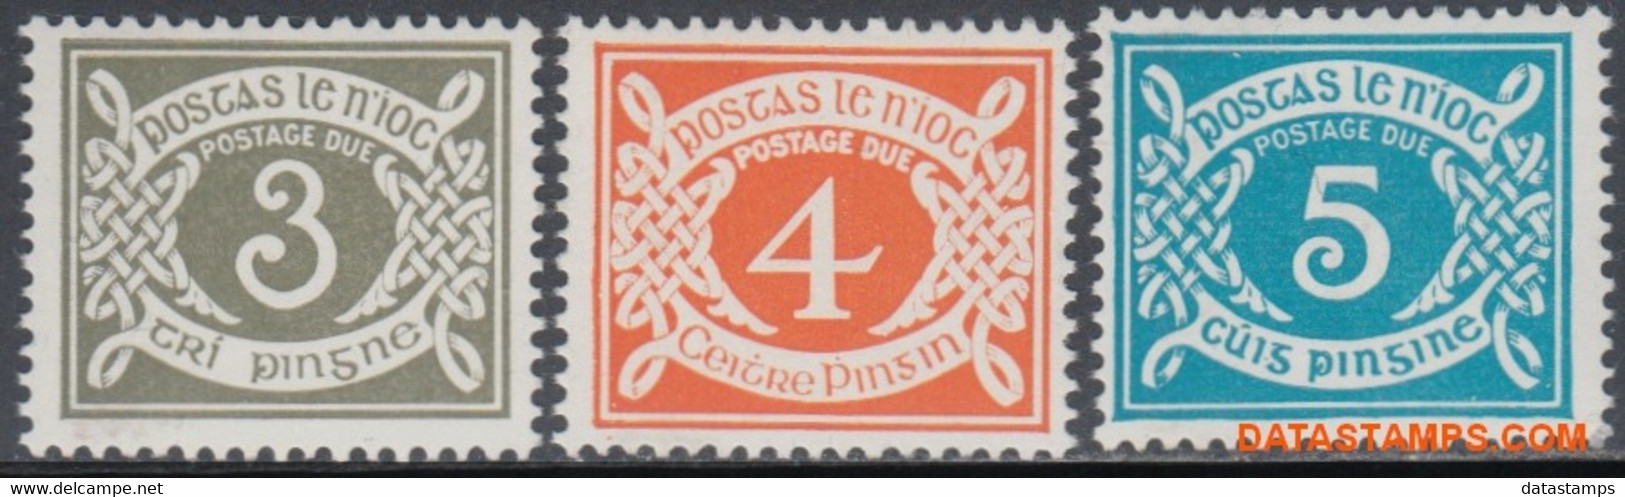 Ierland 1978 - Mi:porto 22/24, Yv:TX 22/24, Penalty Stamps - XX - Figure - Postage Due